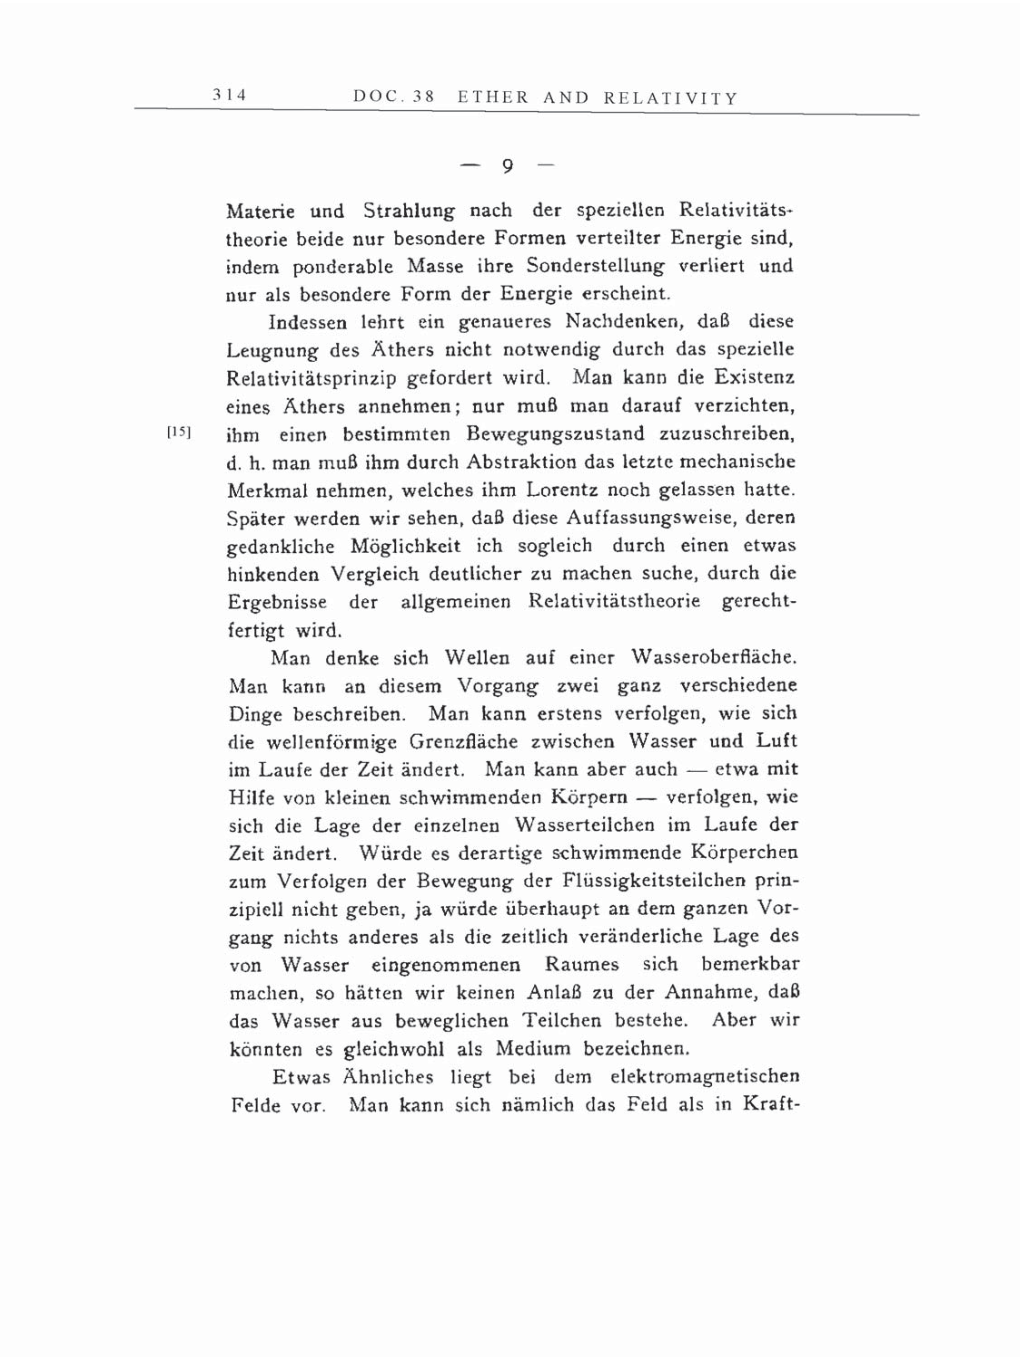 Volume 7: The Berlin Years: Writings, 1918-1921 page 314